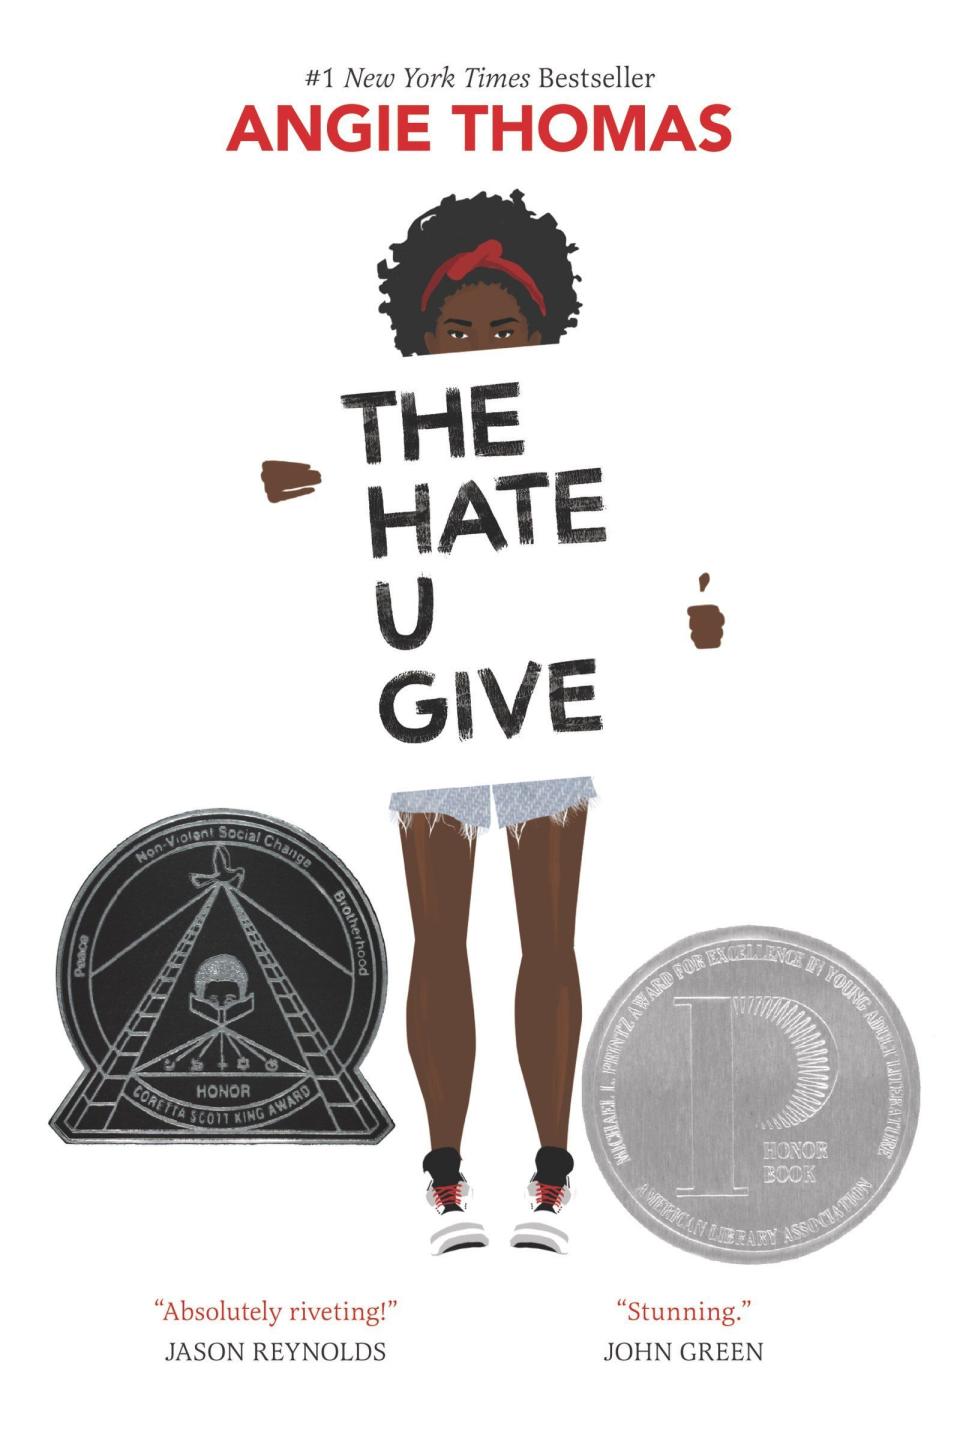 5) The Hate U Give